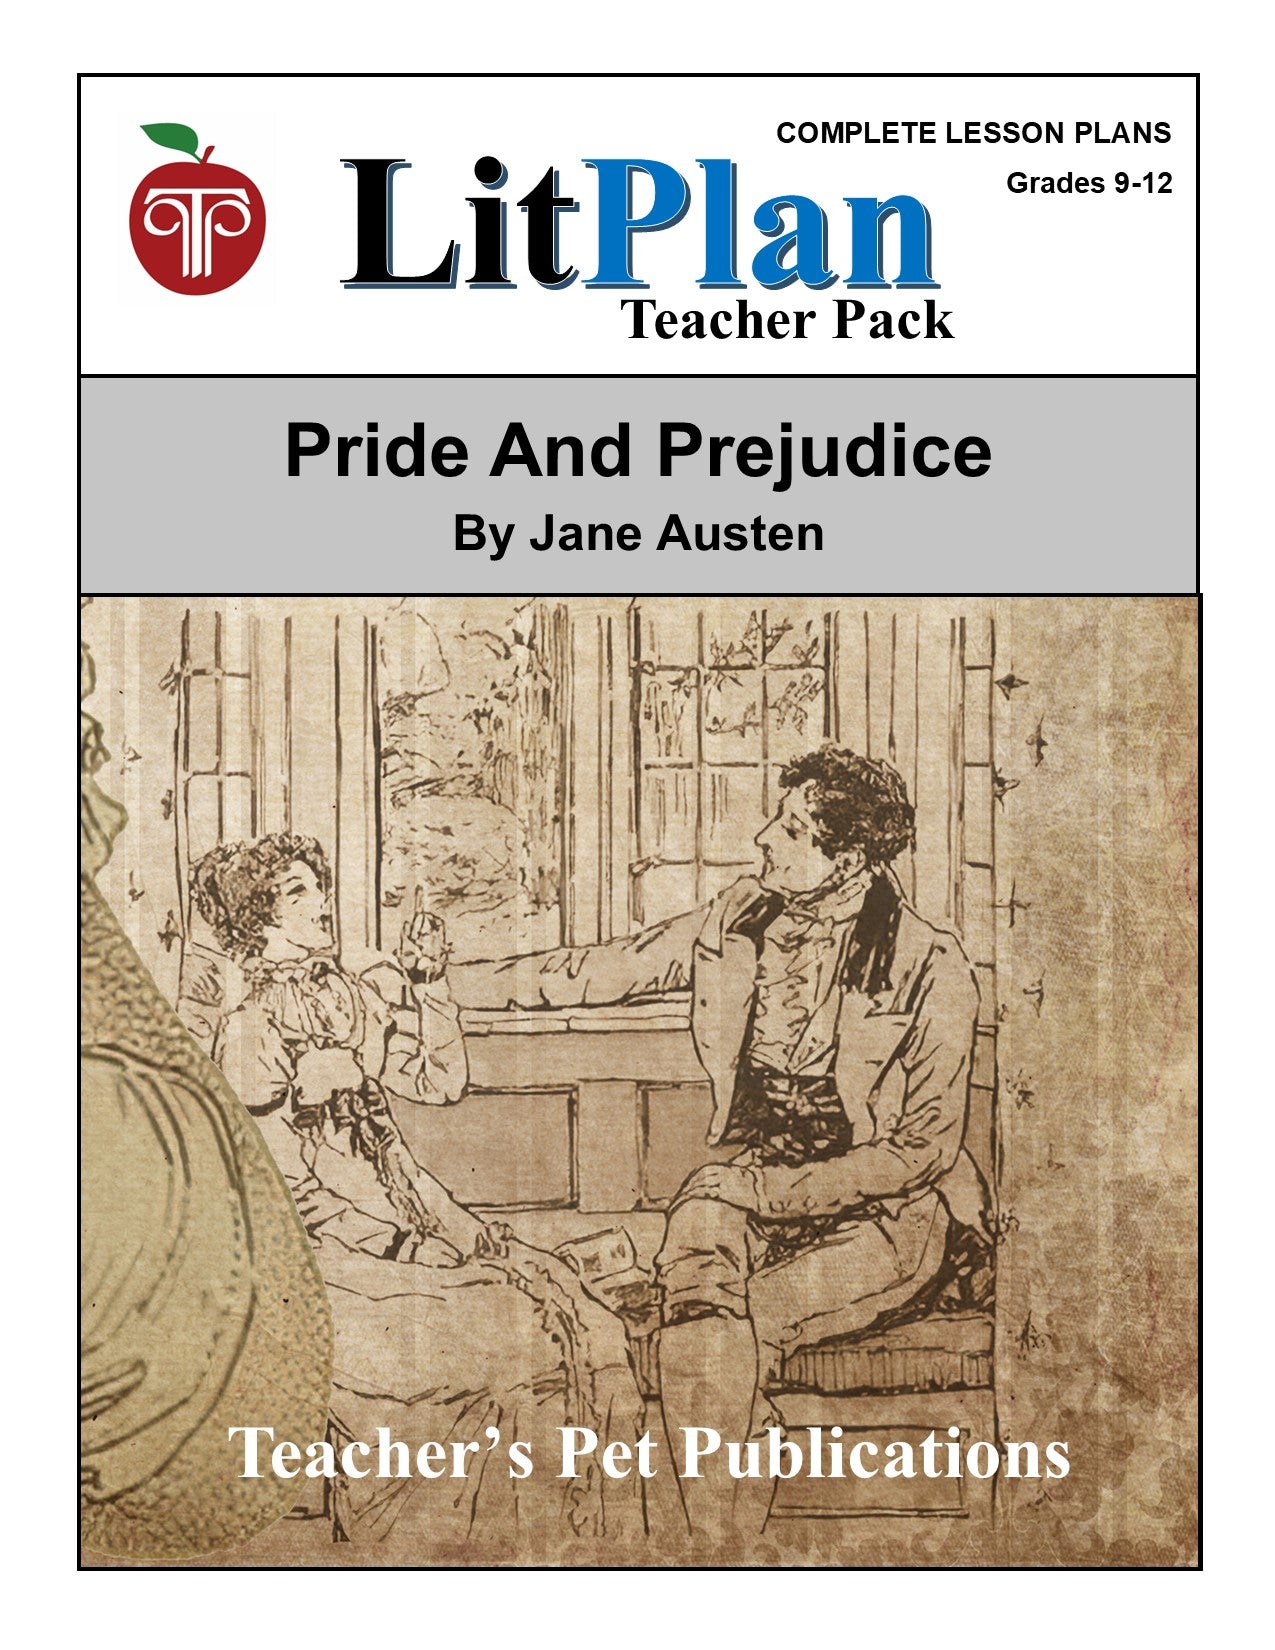 Pride and Prejudice: LitPlan Teacher Pack Grades 9-12